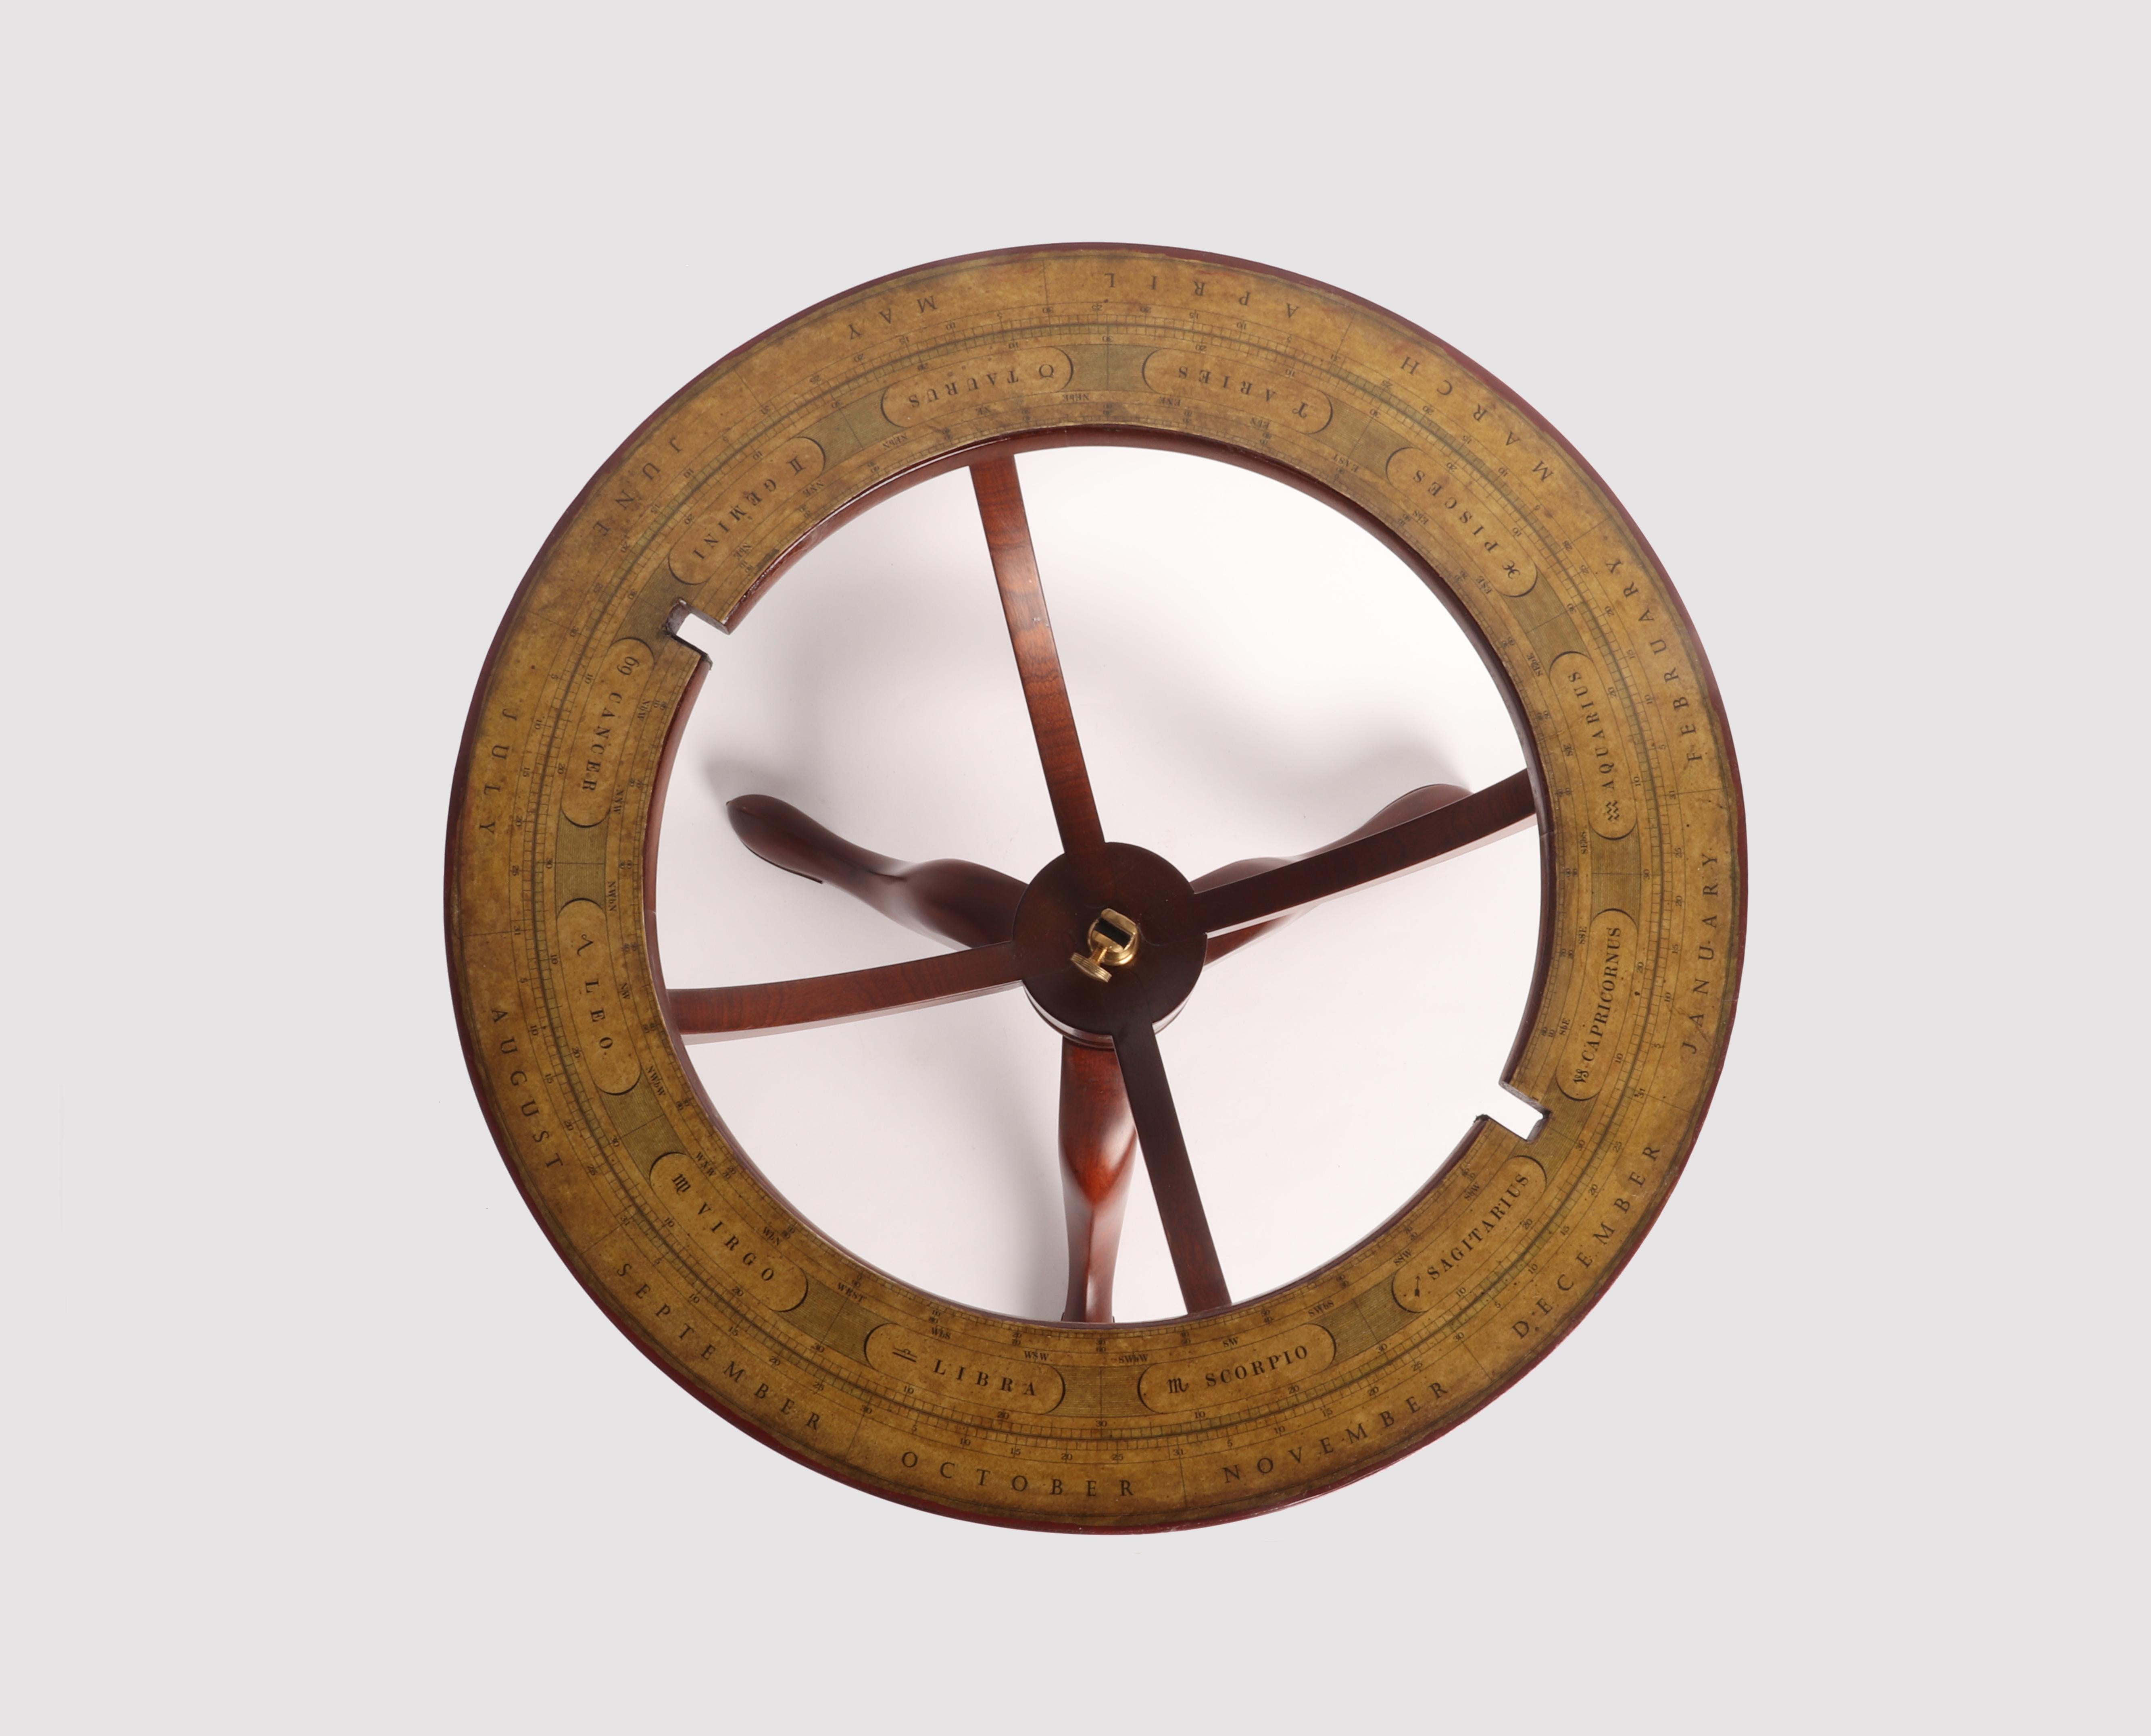 Celestial Globe Signed Smith, London, 1820 4